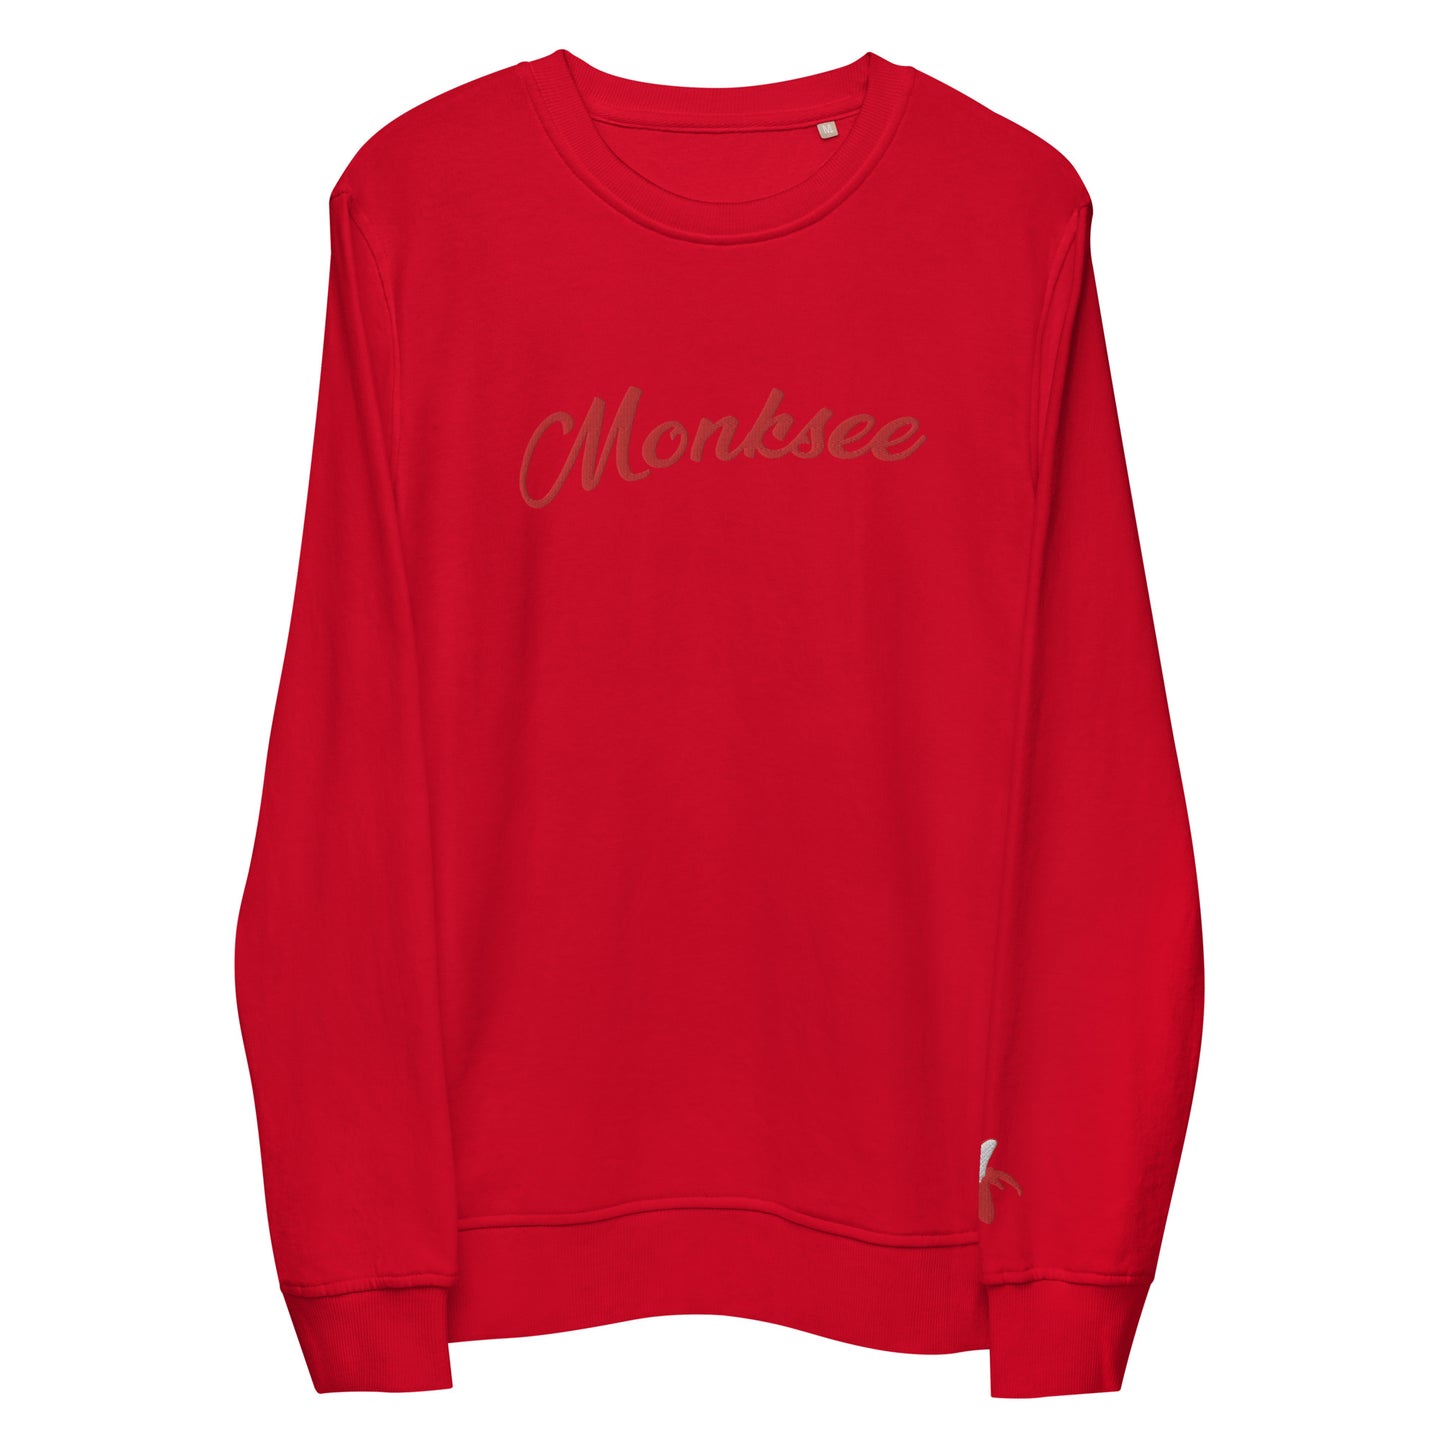 I.C Red - Organic Monksee sweatshirt.